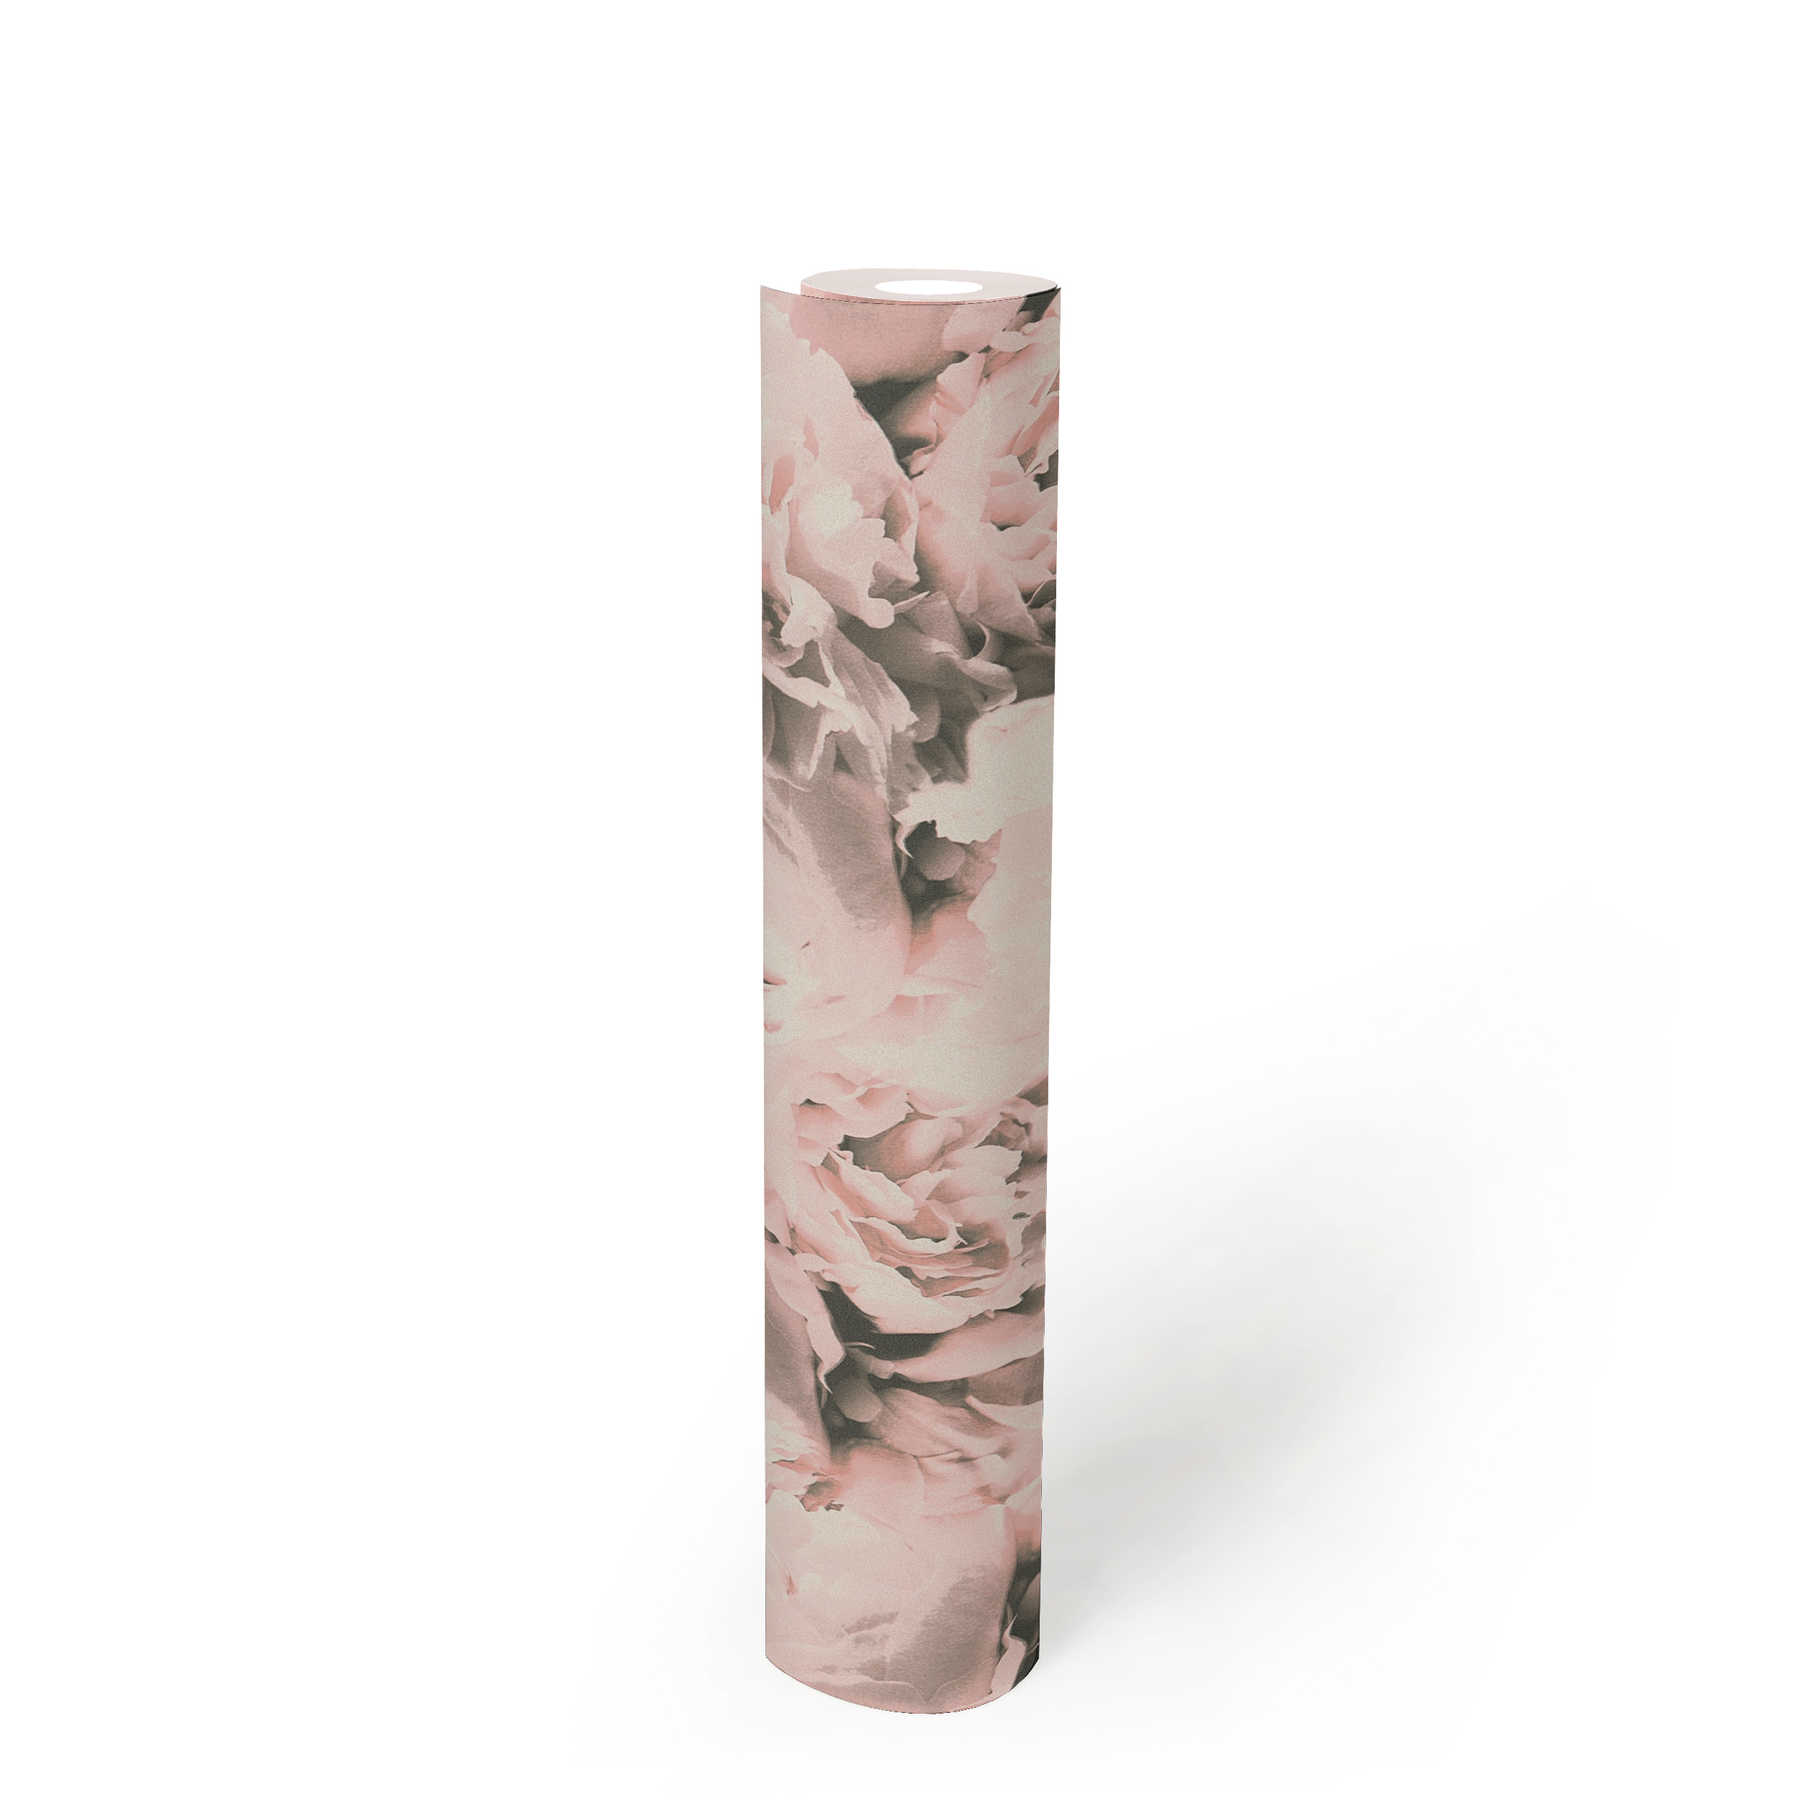             Bloemenbehang rozen met glanseffect - roze, crème
        